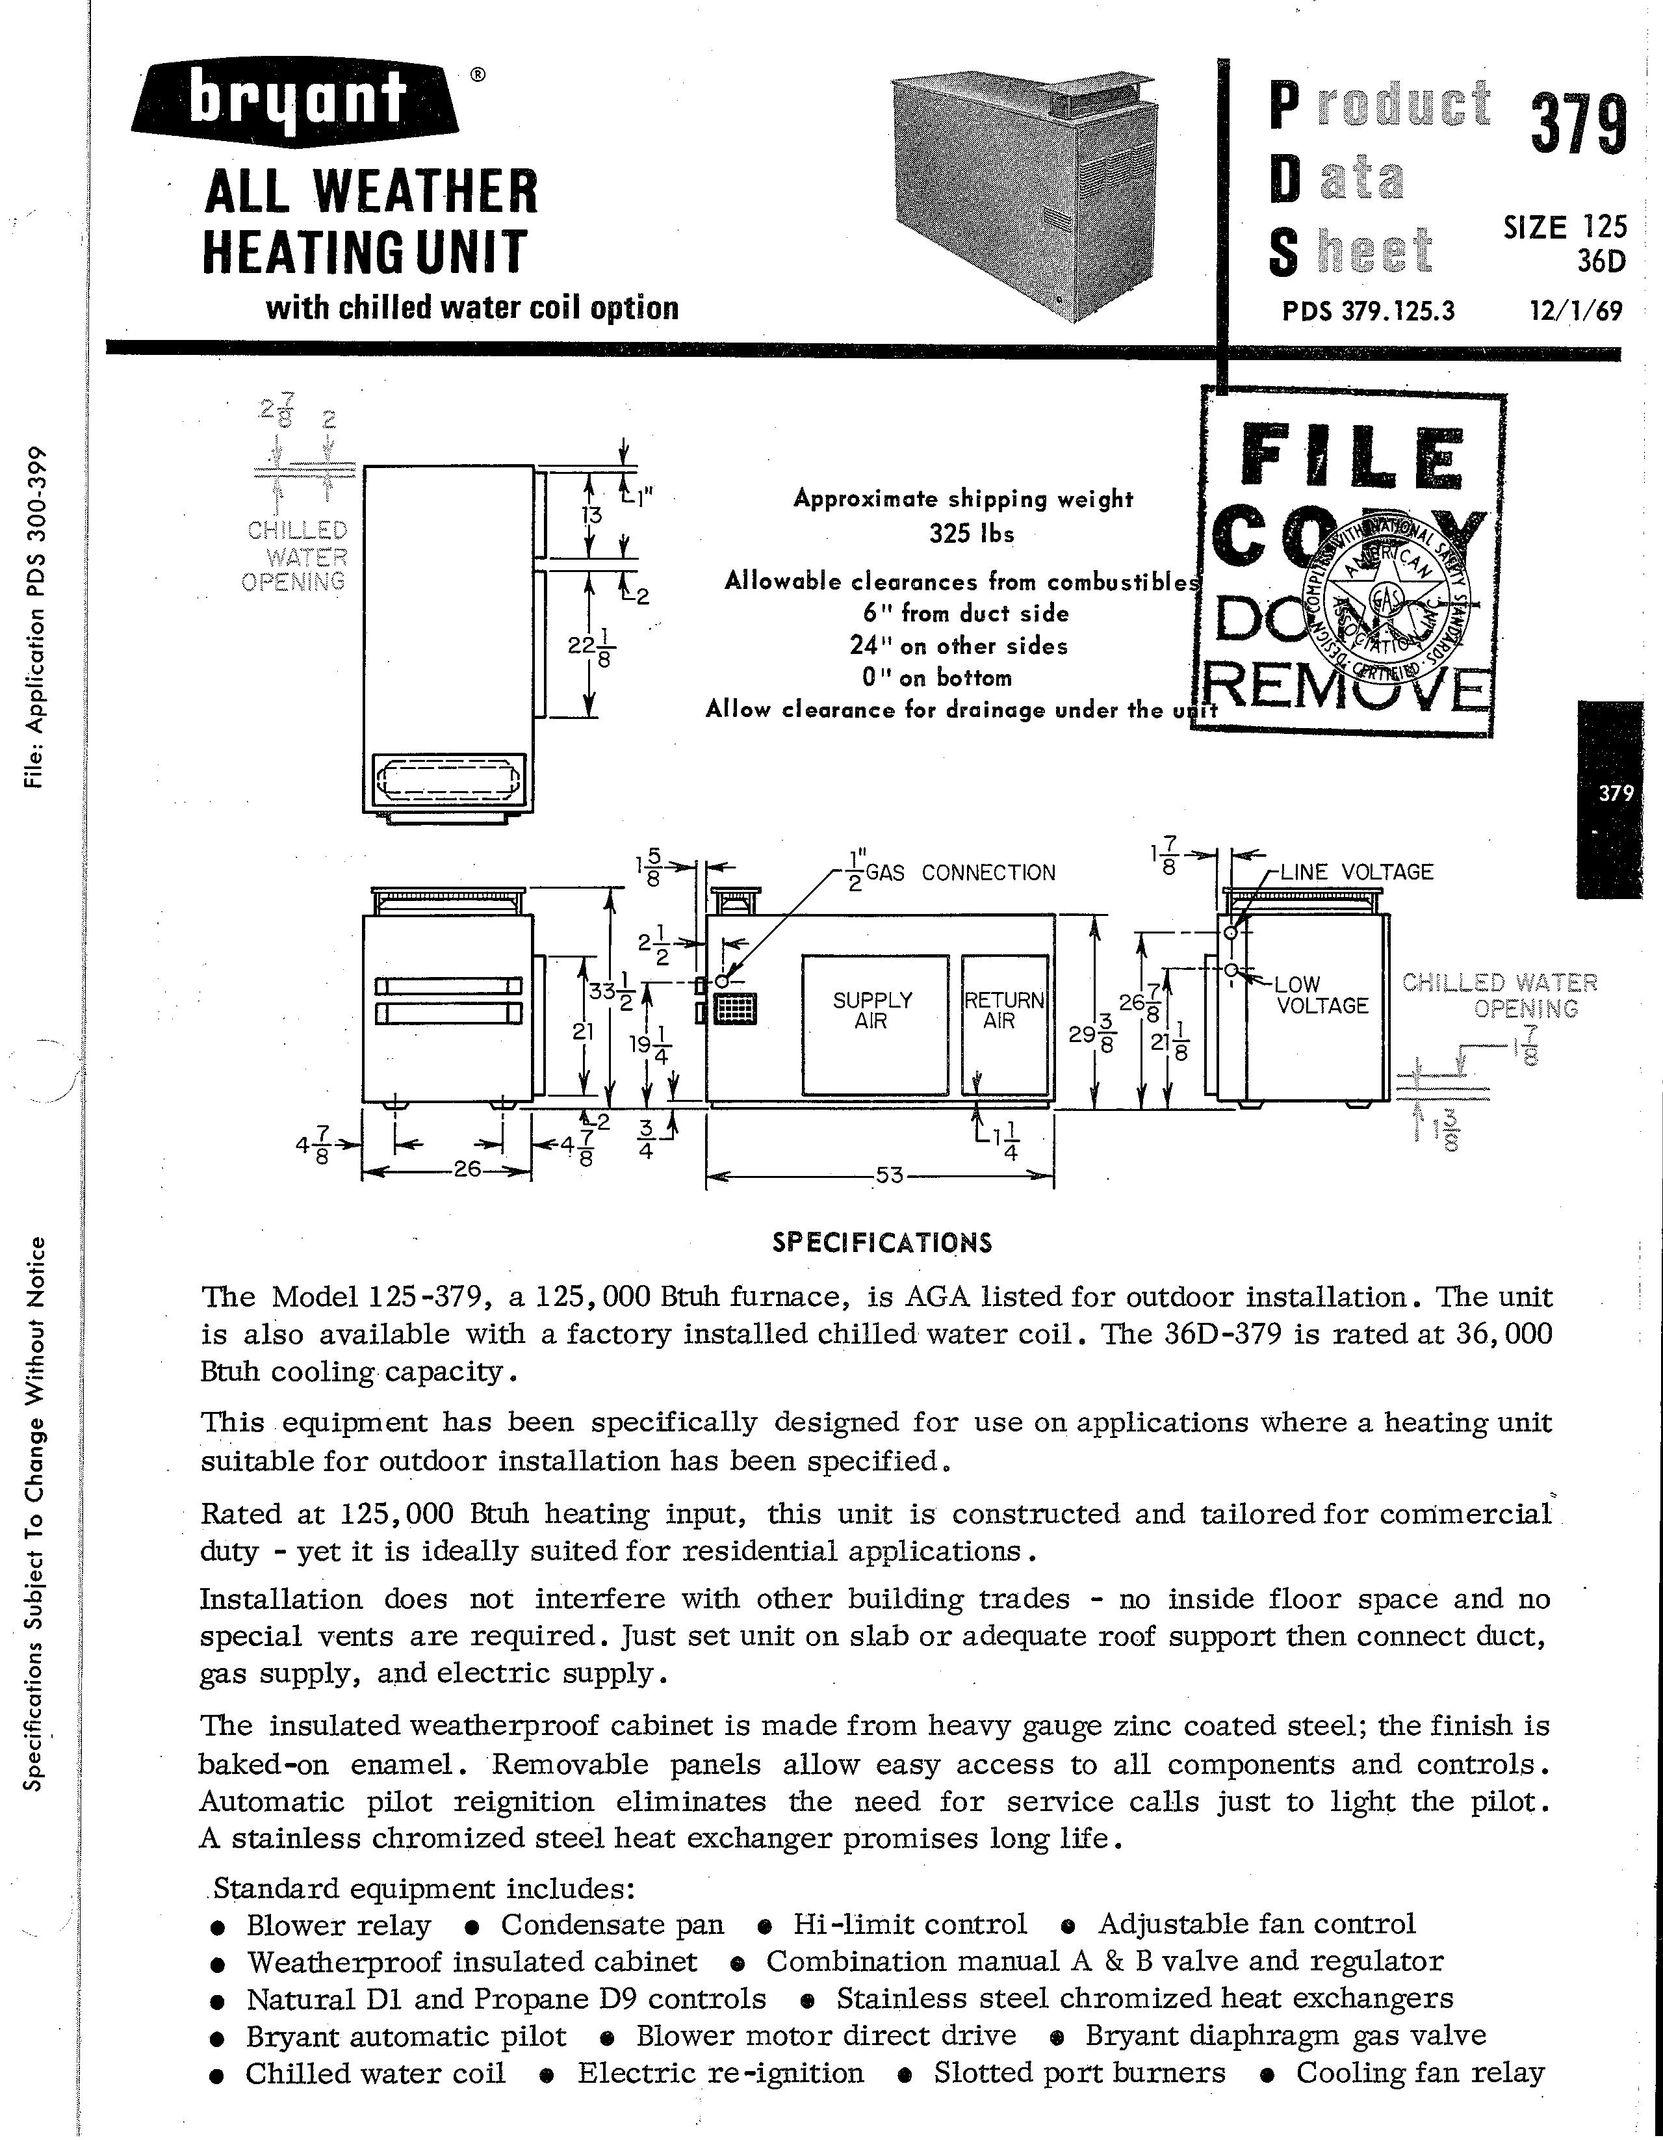 Bryant 379 Heating System User Manual